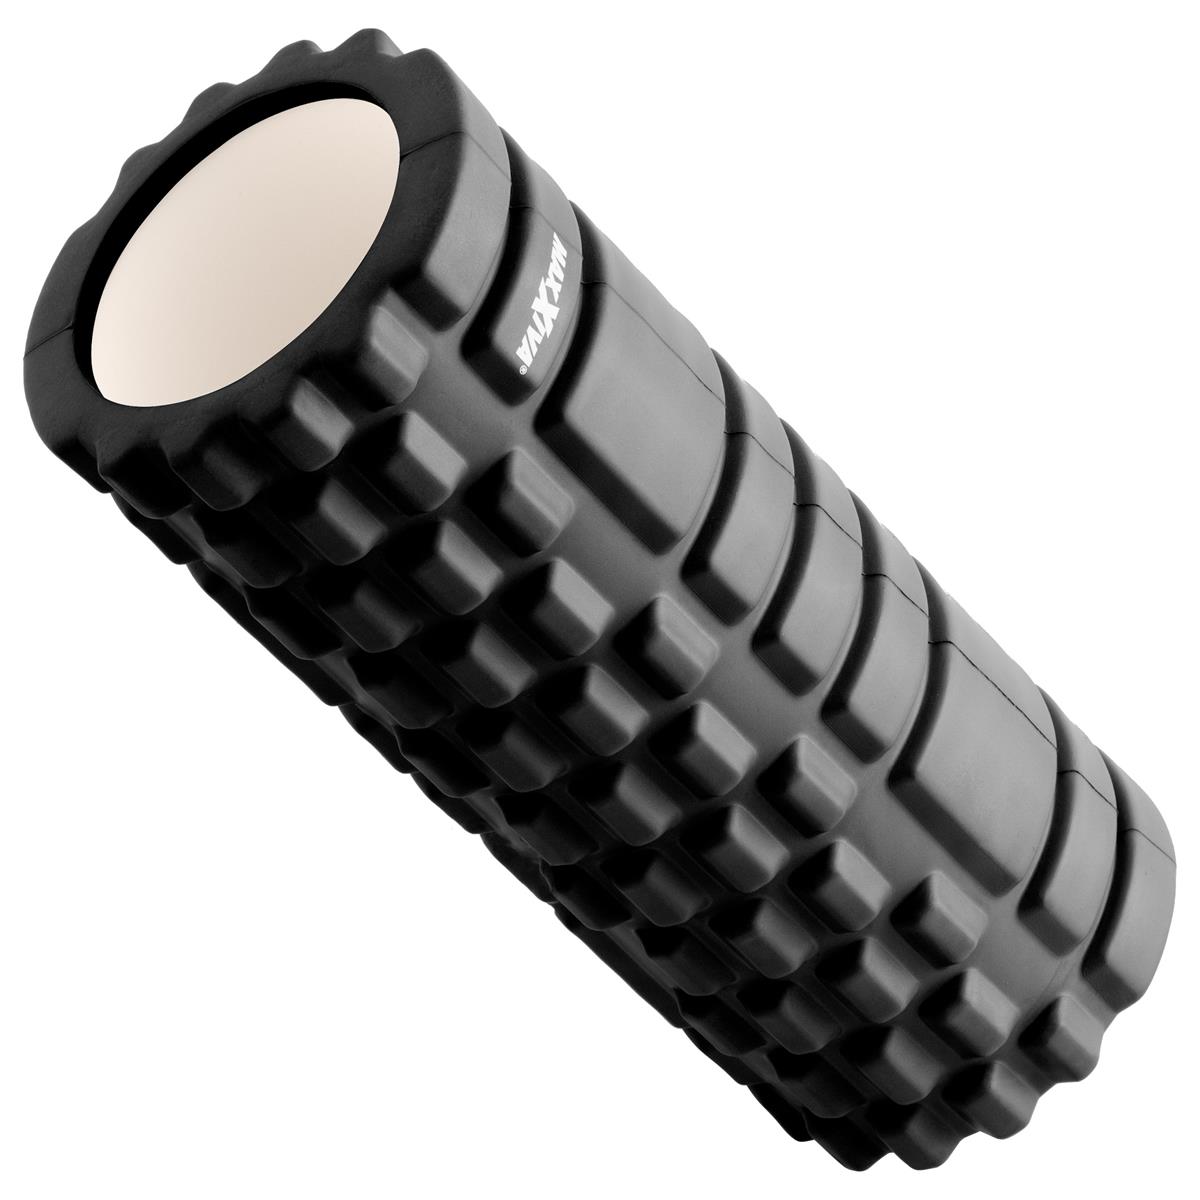 MAXXIVA Massagerolle schwarz 33x14 cm Faszienrolle Trainings-Rolle Fitness